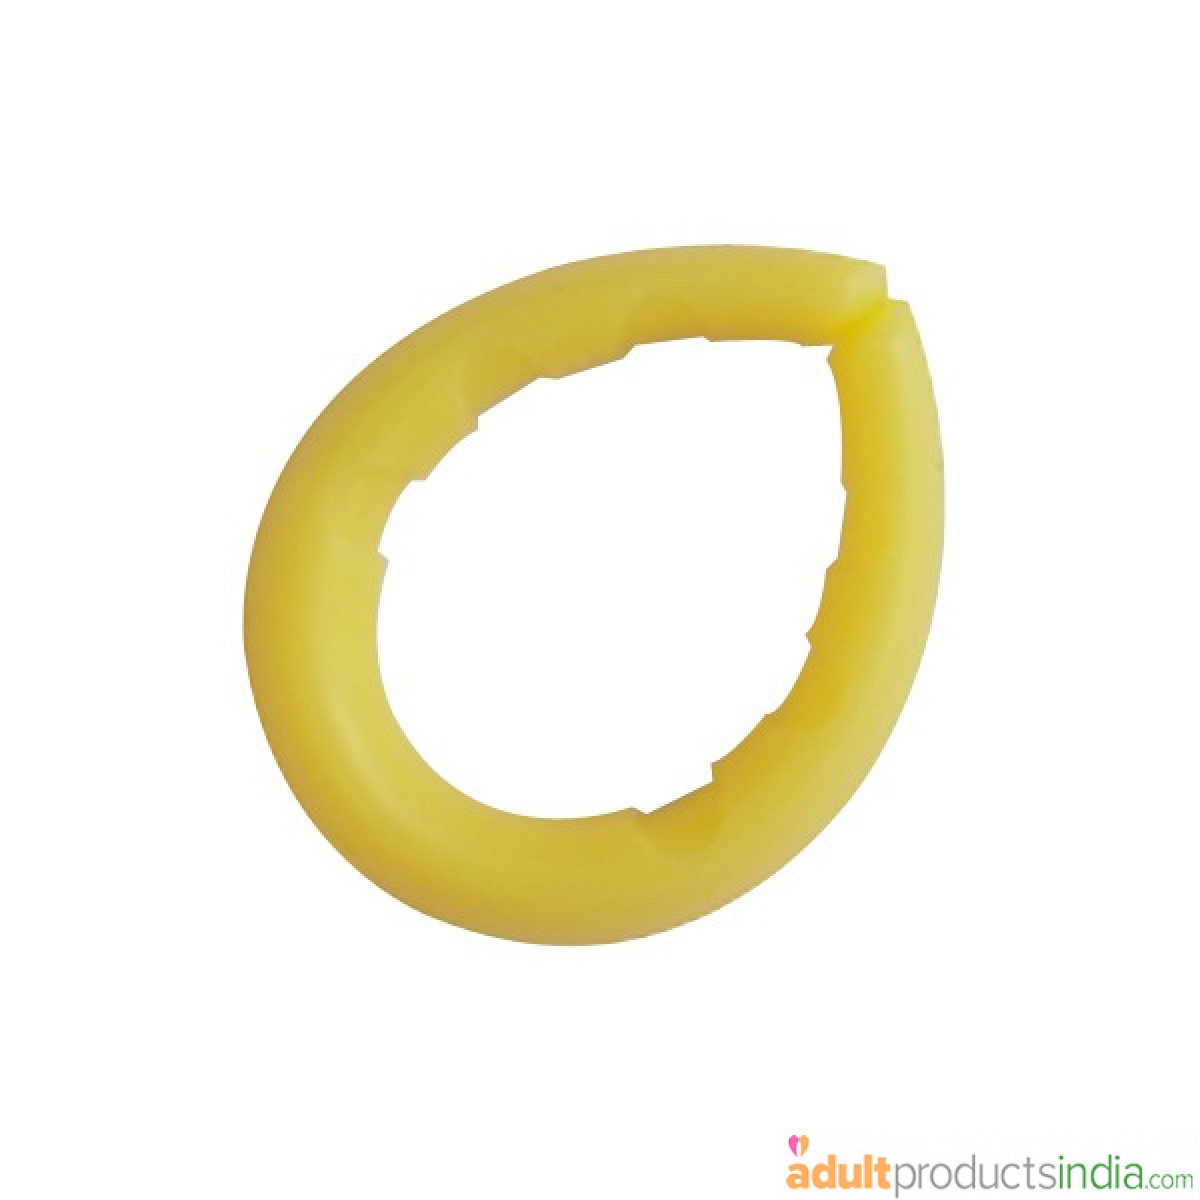 Prepuce Cock Ring - Large Size